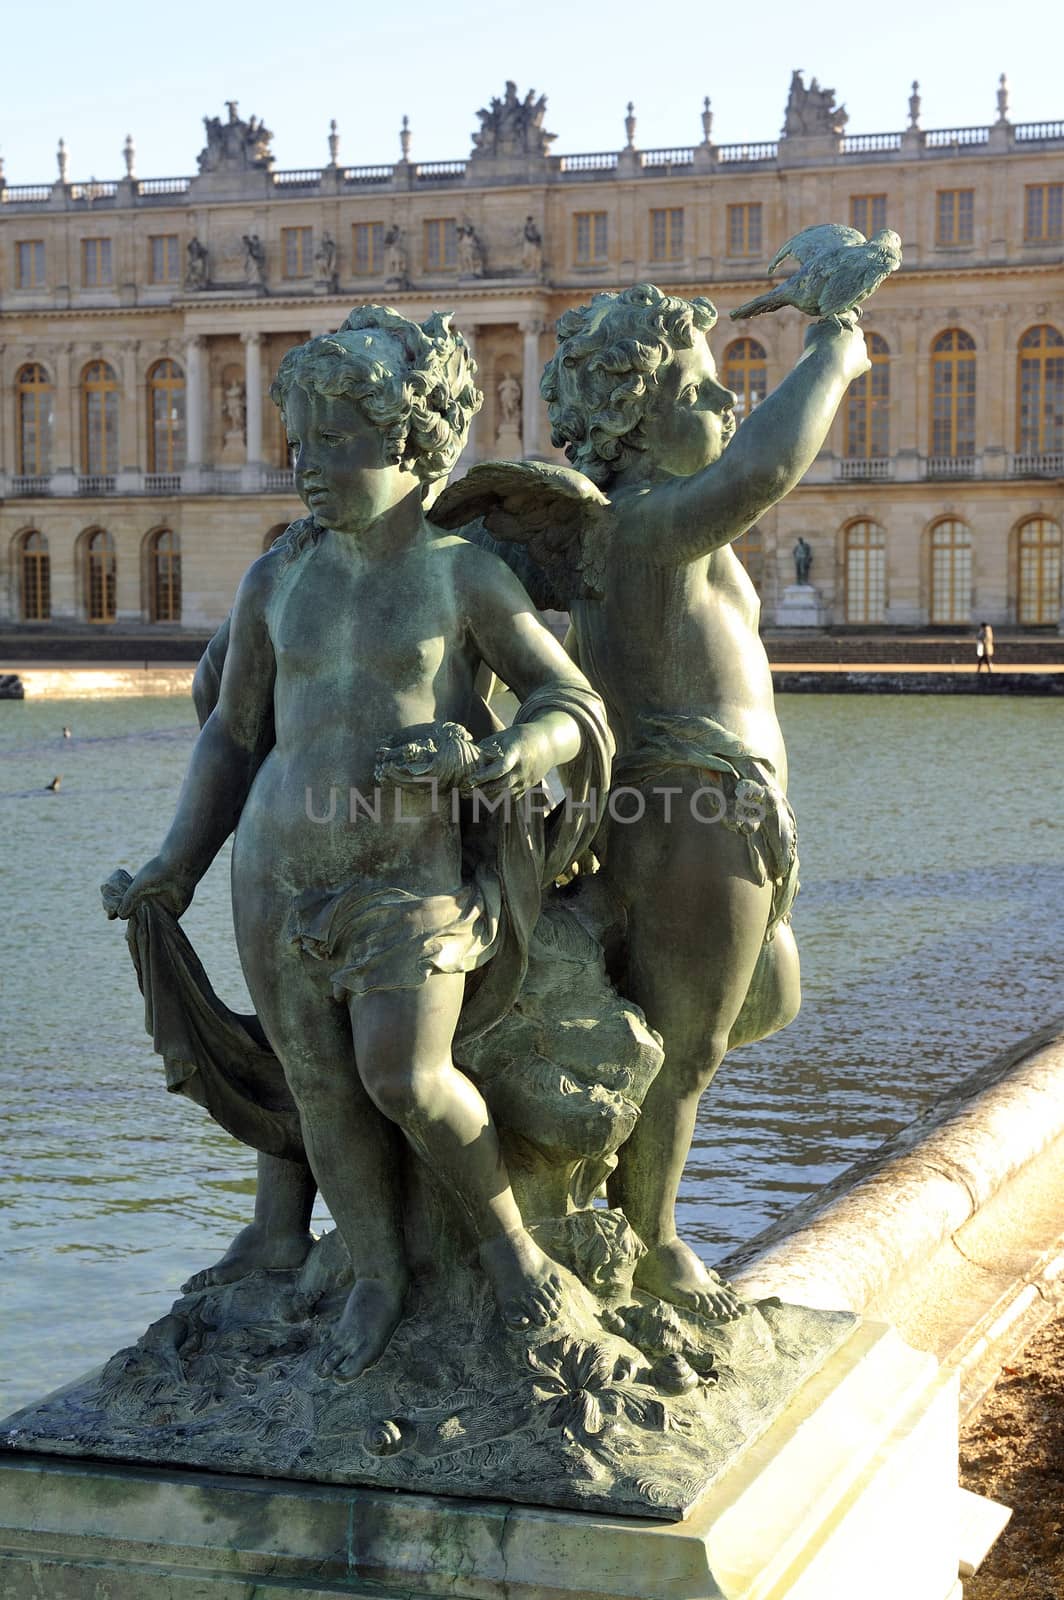 Park of castle of Versailles by gillespaire